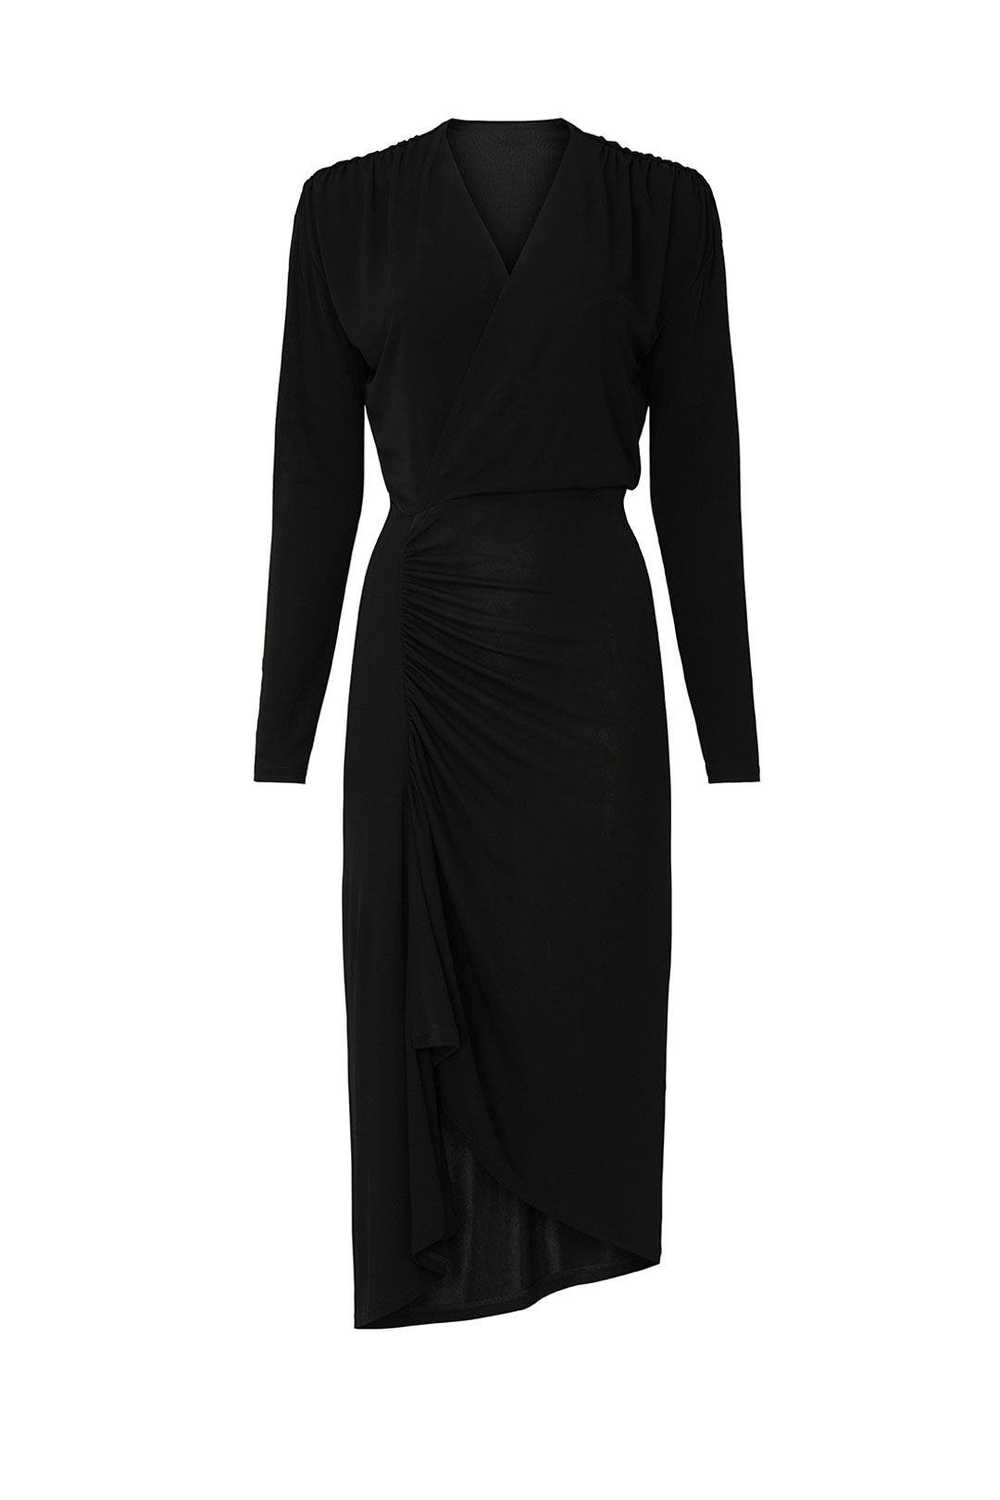 Atlein Black Long Sleeve Ruched Dress - image 5